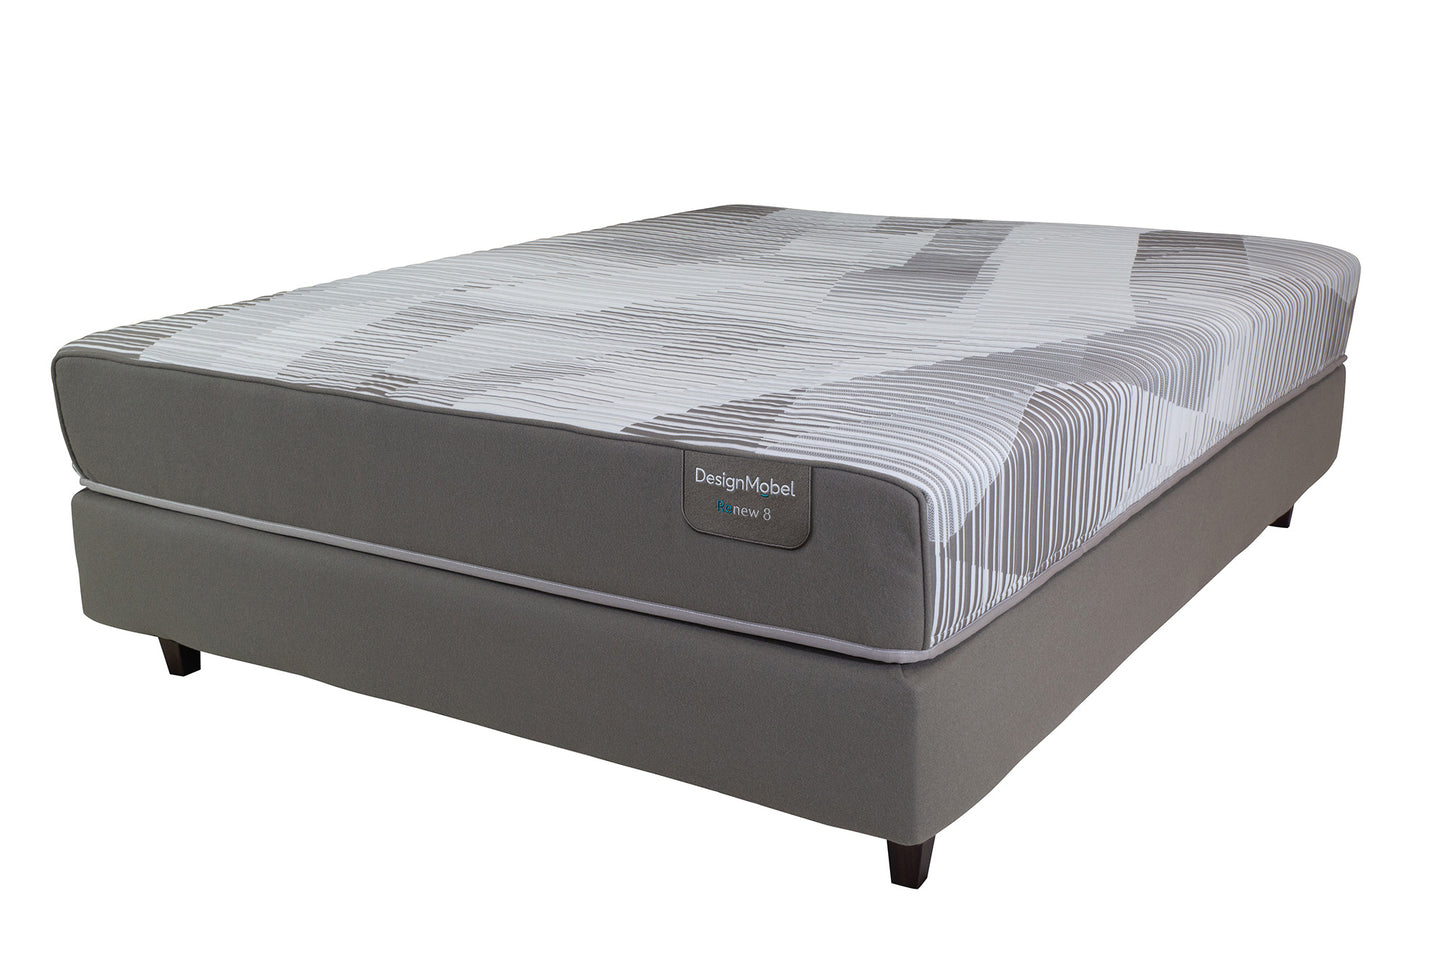 renew8-king-mattress-2